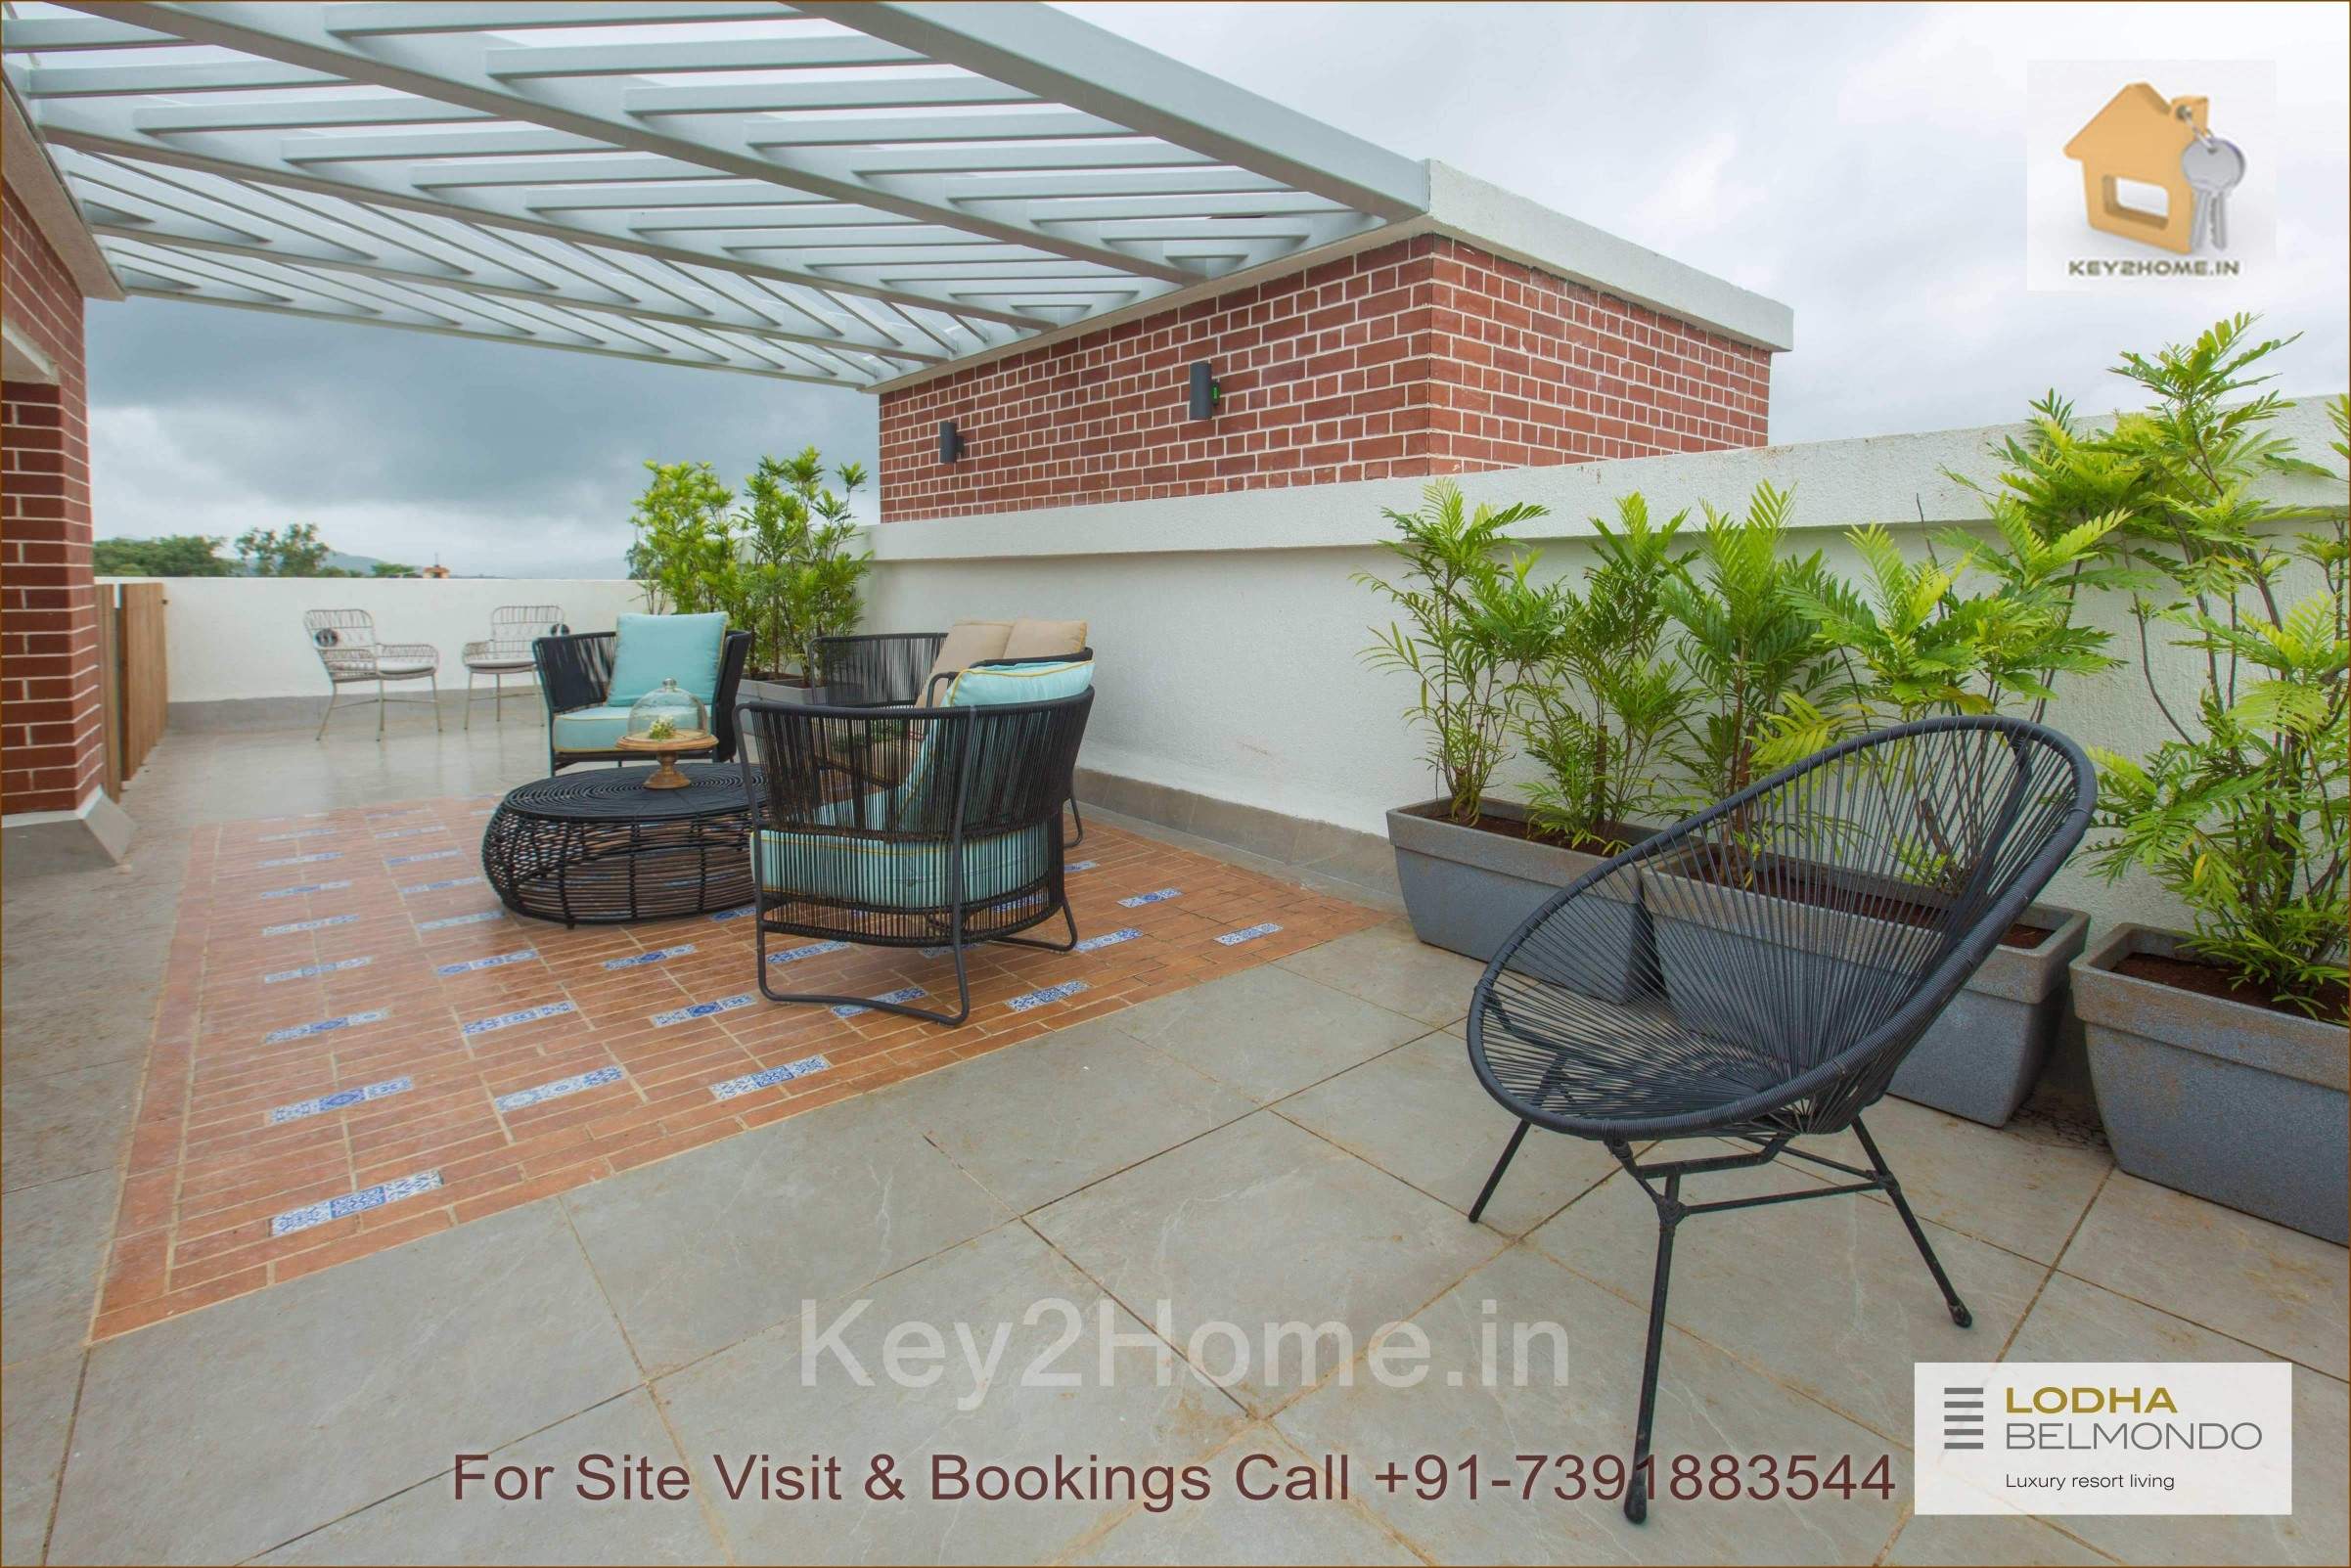 Terrace view of Lodha Belmondo Premium Villas and Housing Pune